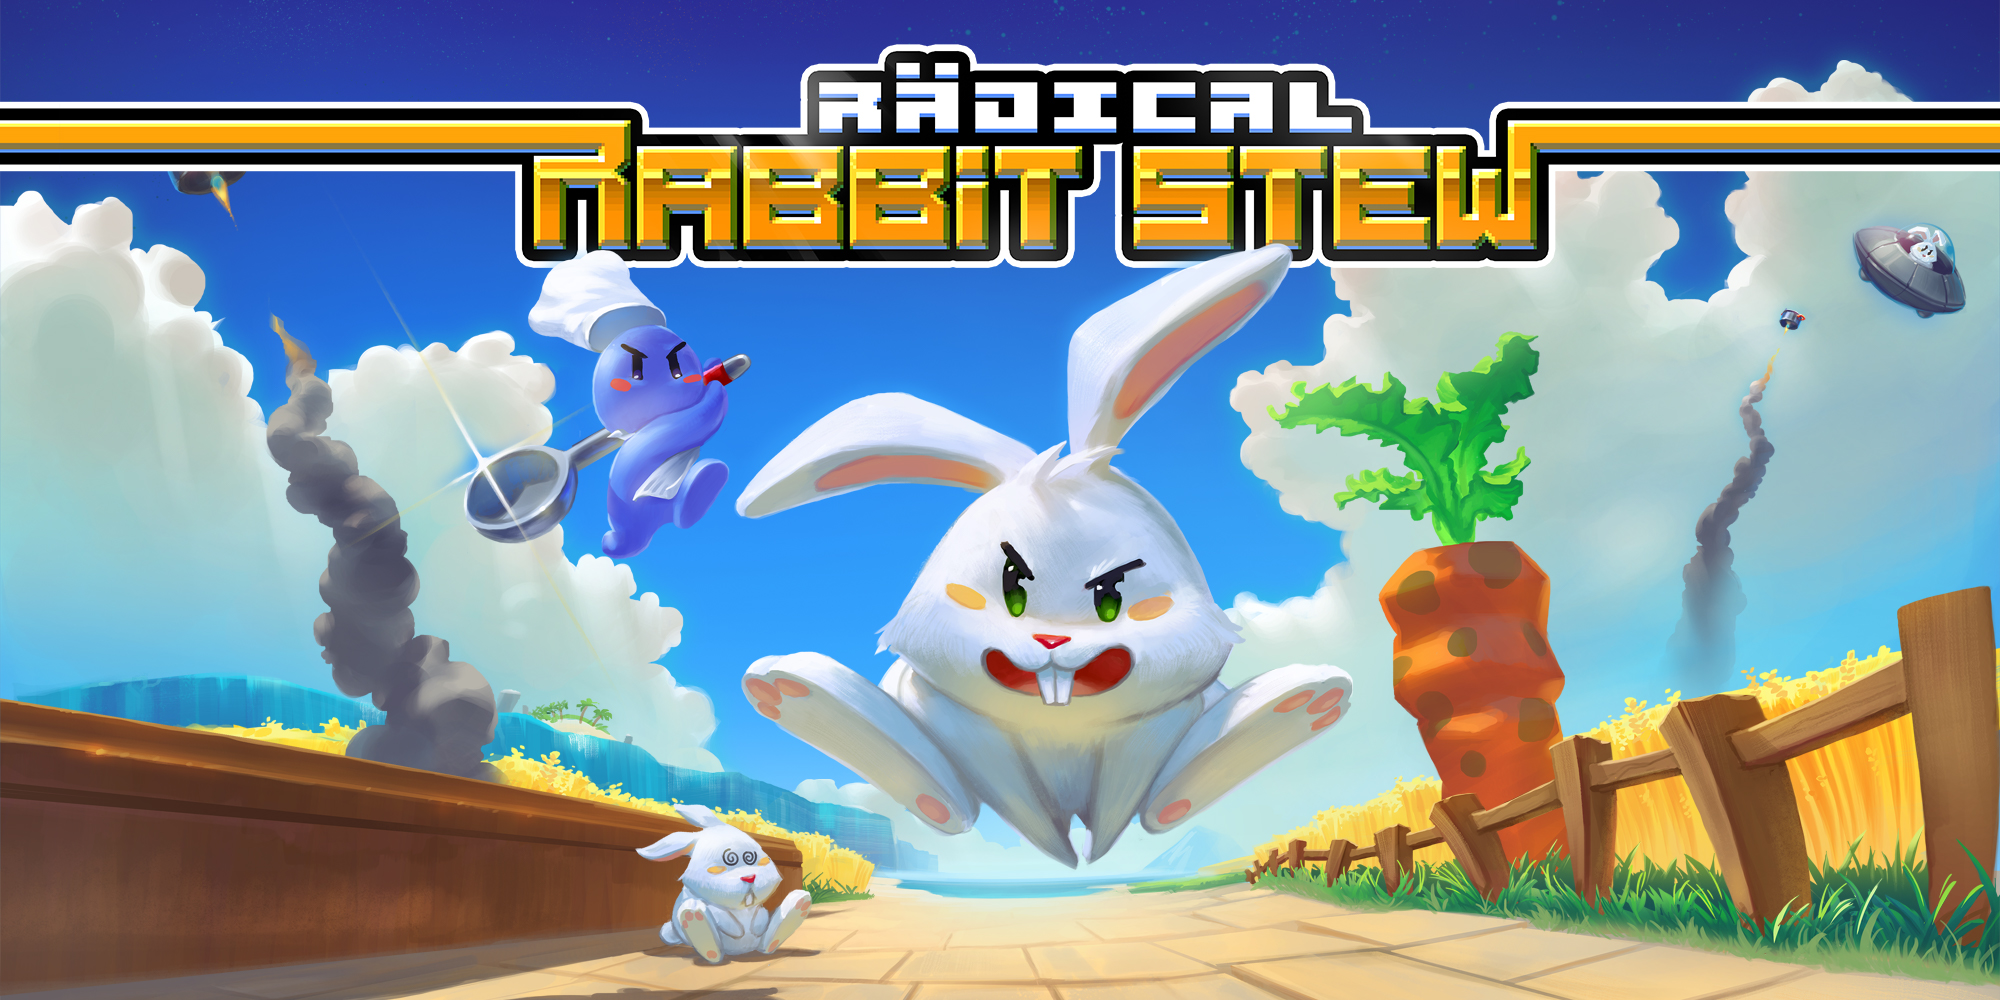 Radical Rabbit Stew | Programas descargables Nintendo Switch ...